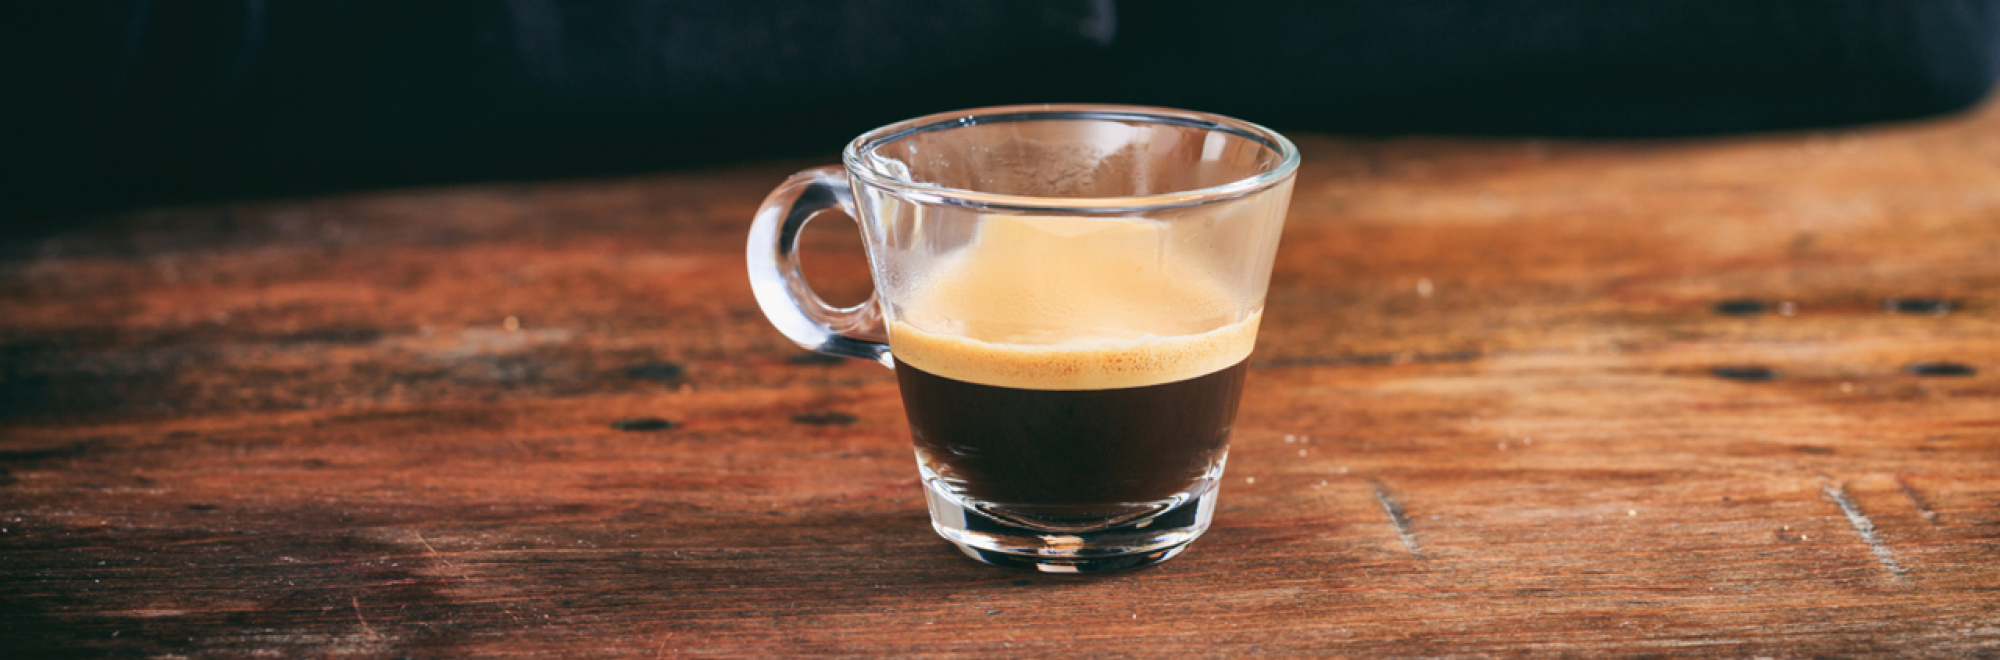 Nespresso Coffee Advisor | SALES CREW